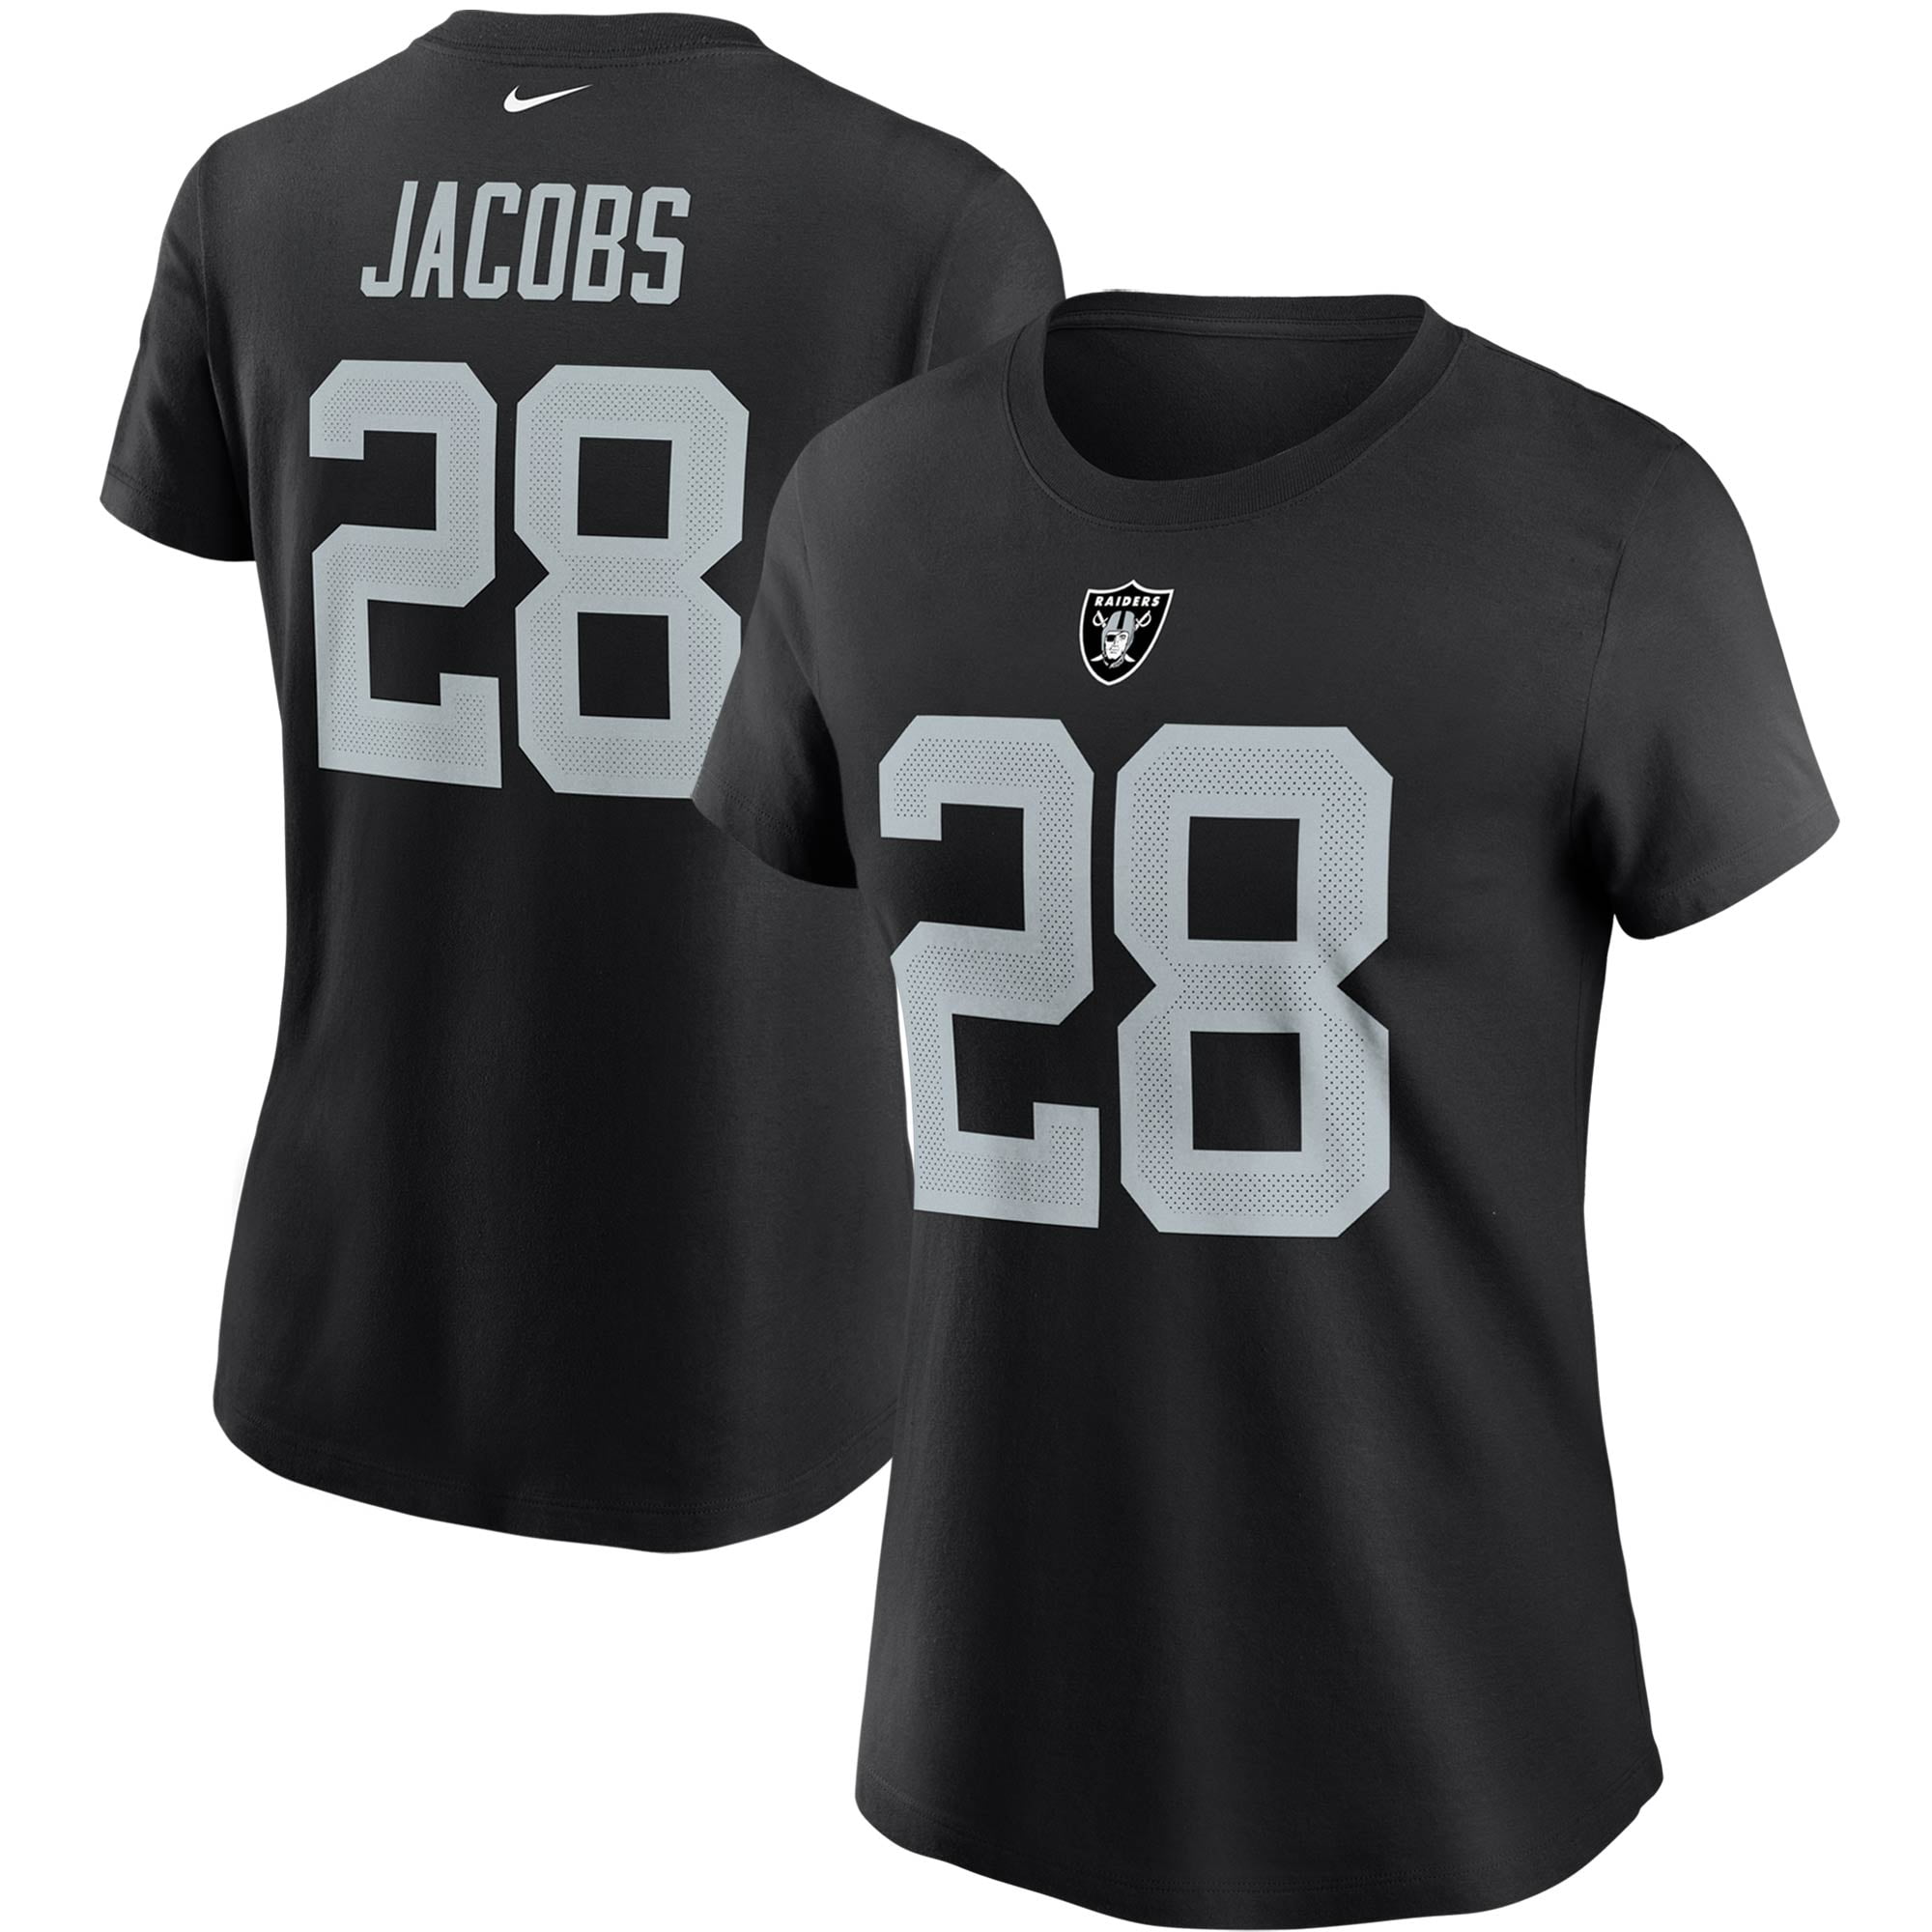 NFL Las Vegas Raiders Women's T-Shirt Medium Black 100% Cotton